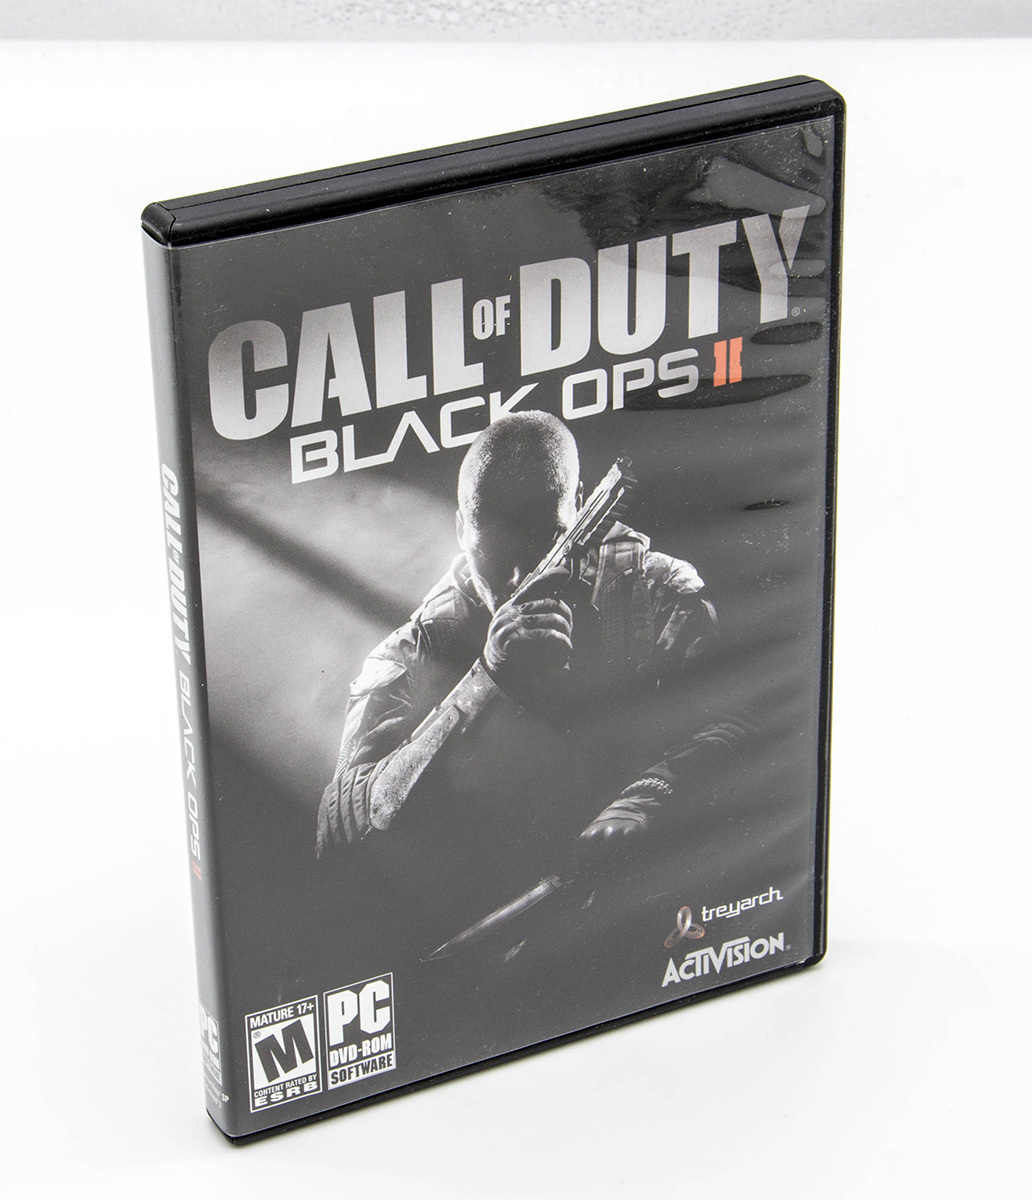 CALL OF DUTY BLACK OPS II Call of Duty black OP s2 English version DVD-ROM 2 sheets set Windows PC version used key code attaching 